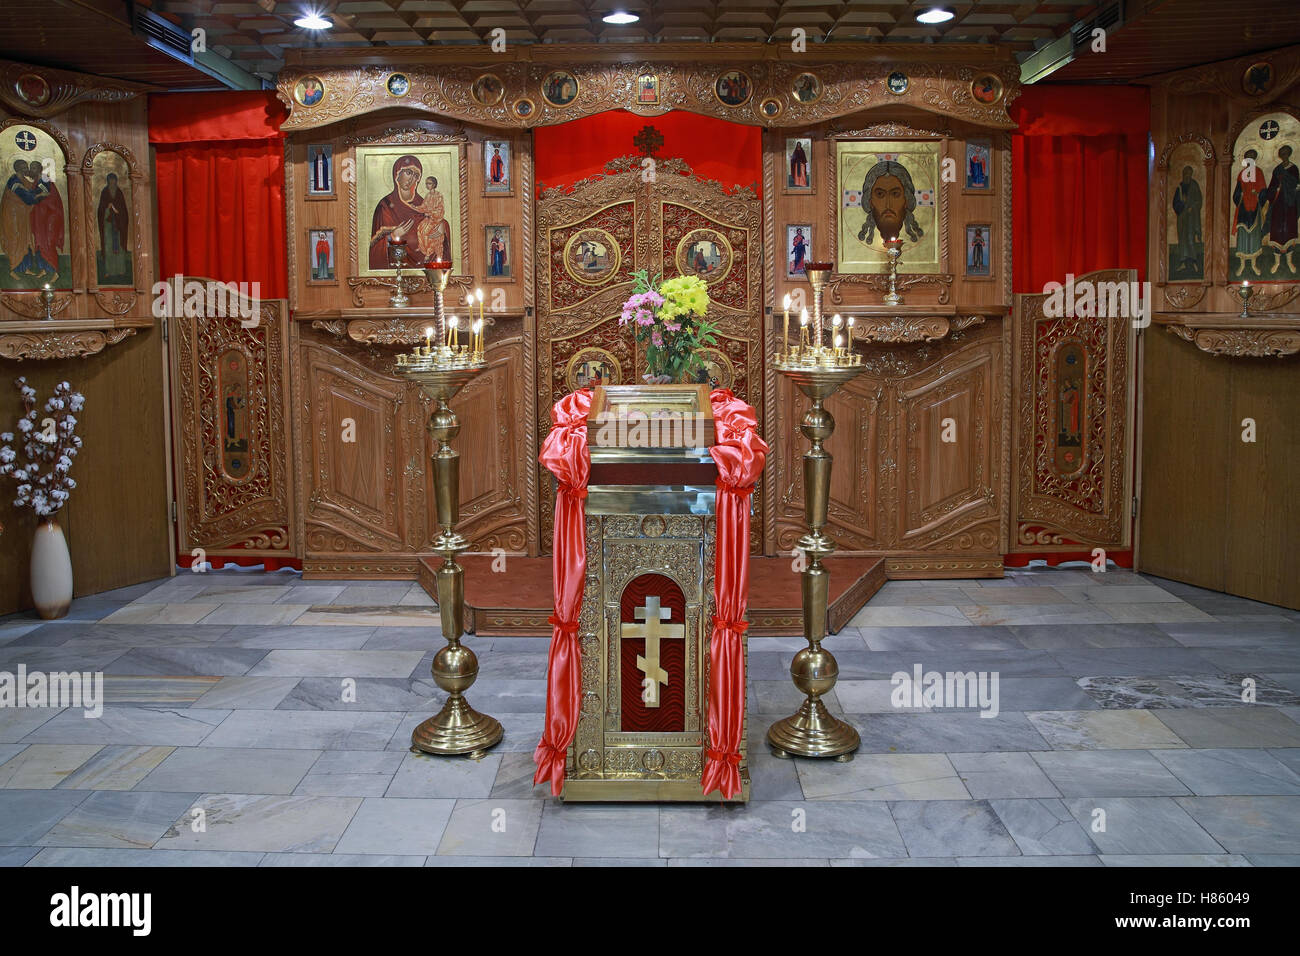 Orthodox iconostasis, interior of an Orthodox church Stock Photo